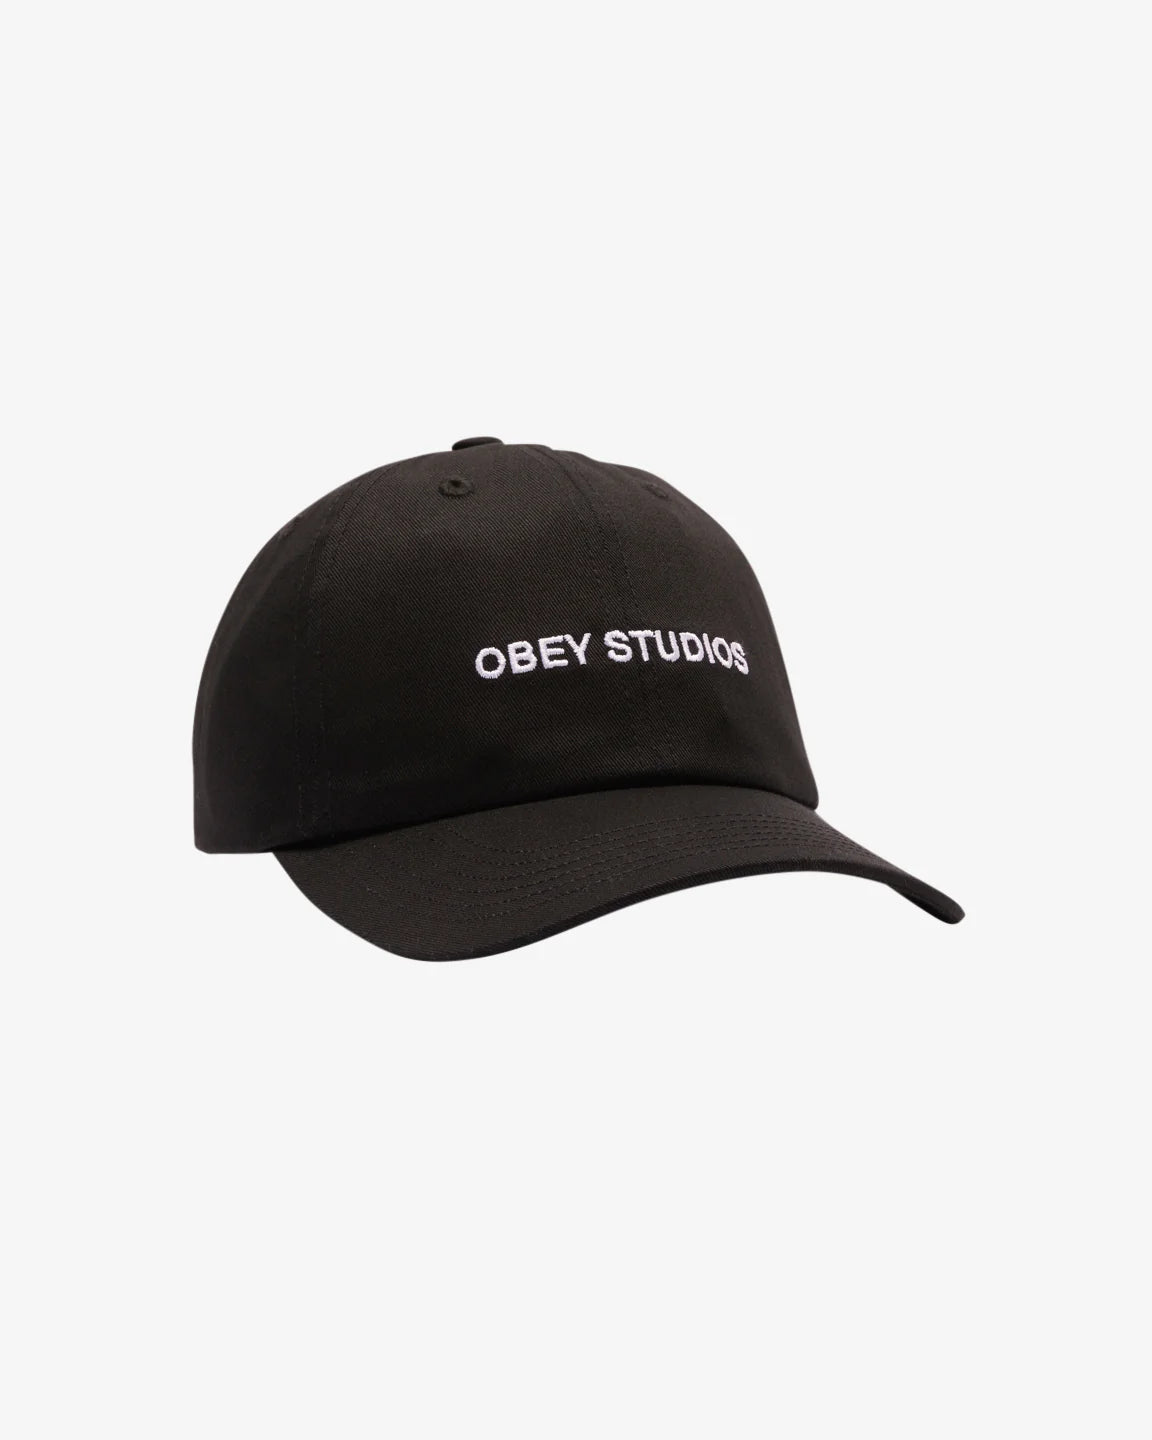 OBEY Studios Strapback Hat Black Men's Hats Obey 